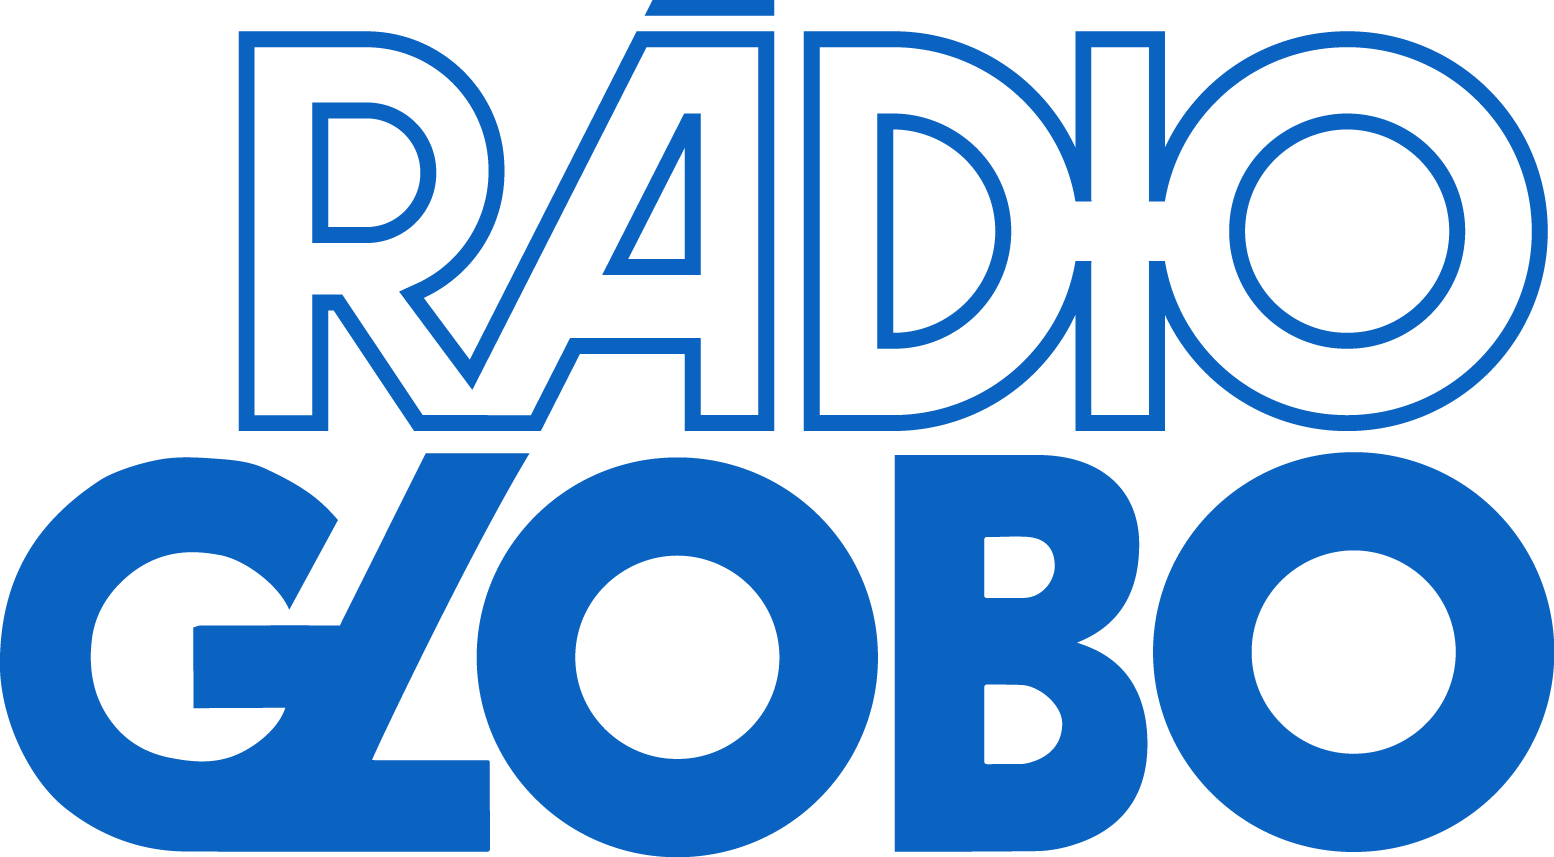 File:Globoplay logo 2020.svg - Wikipedia